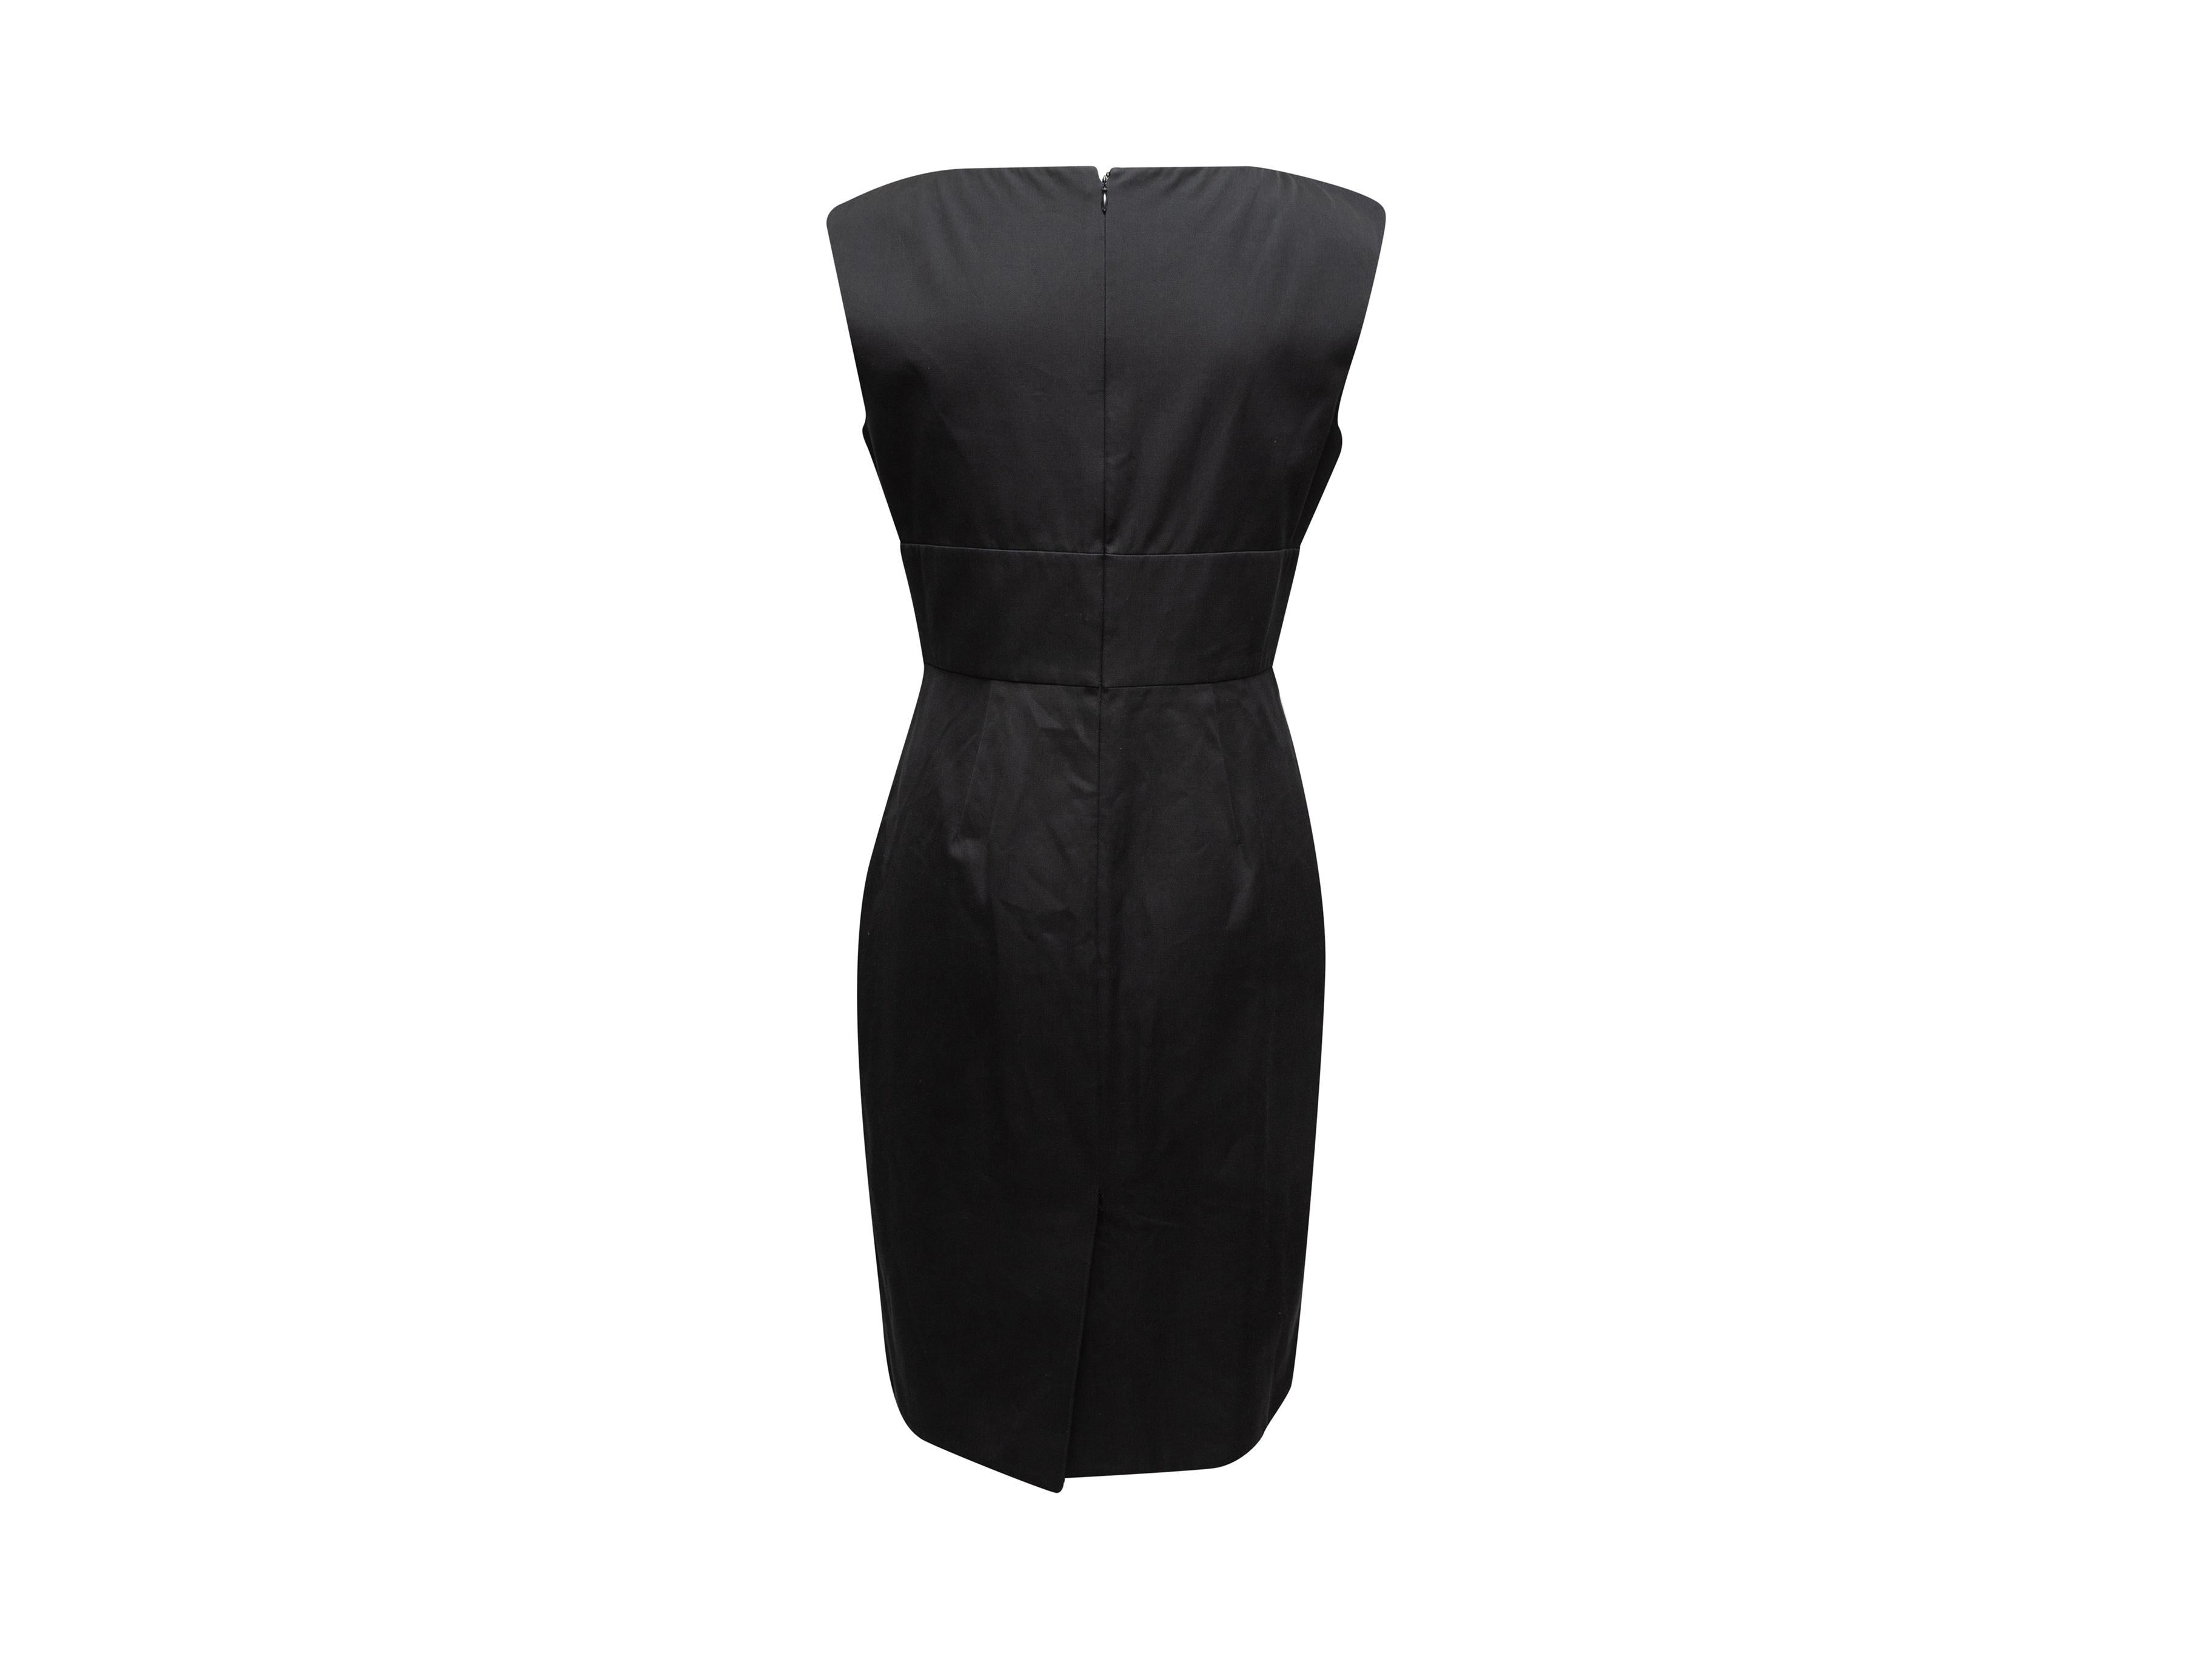  Prada Black Fitted Sleeveless Dress 1